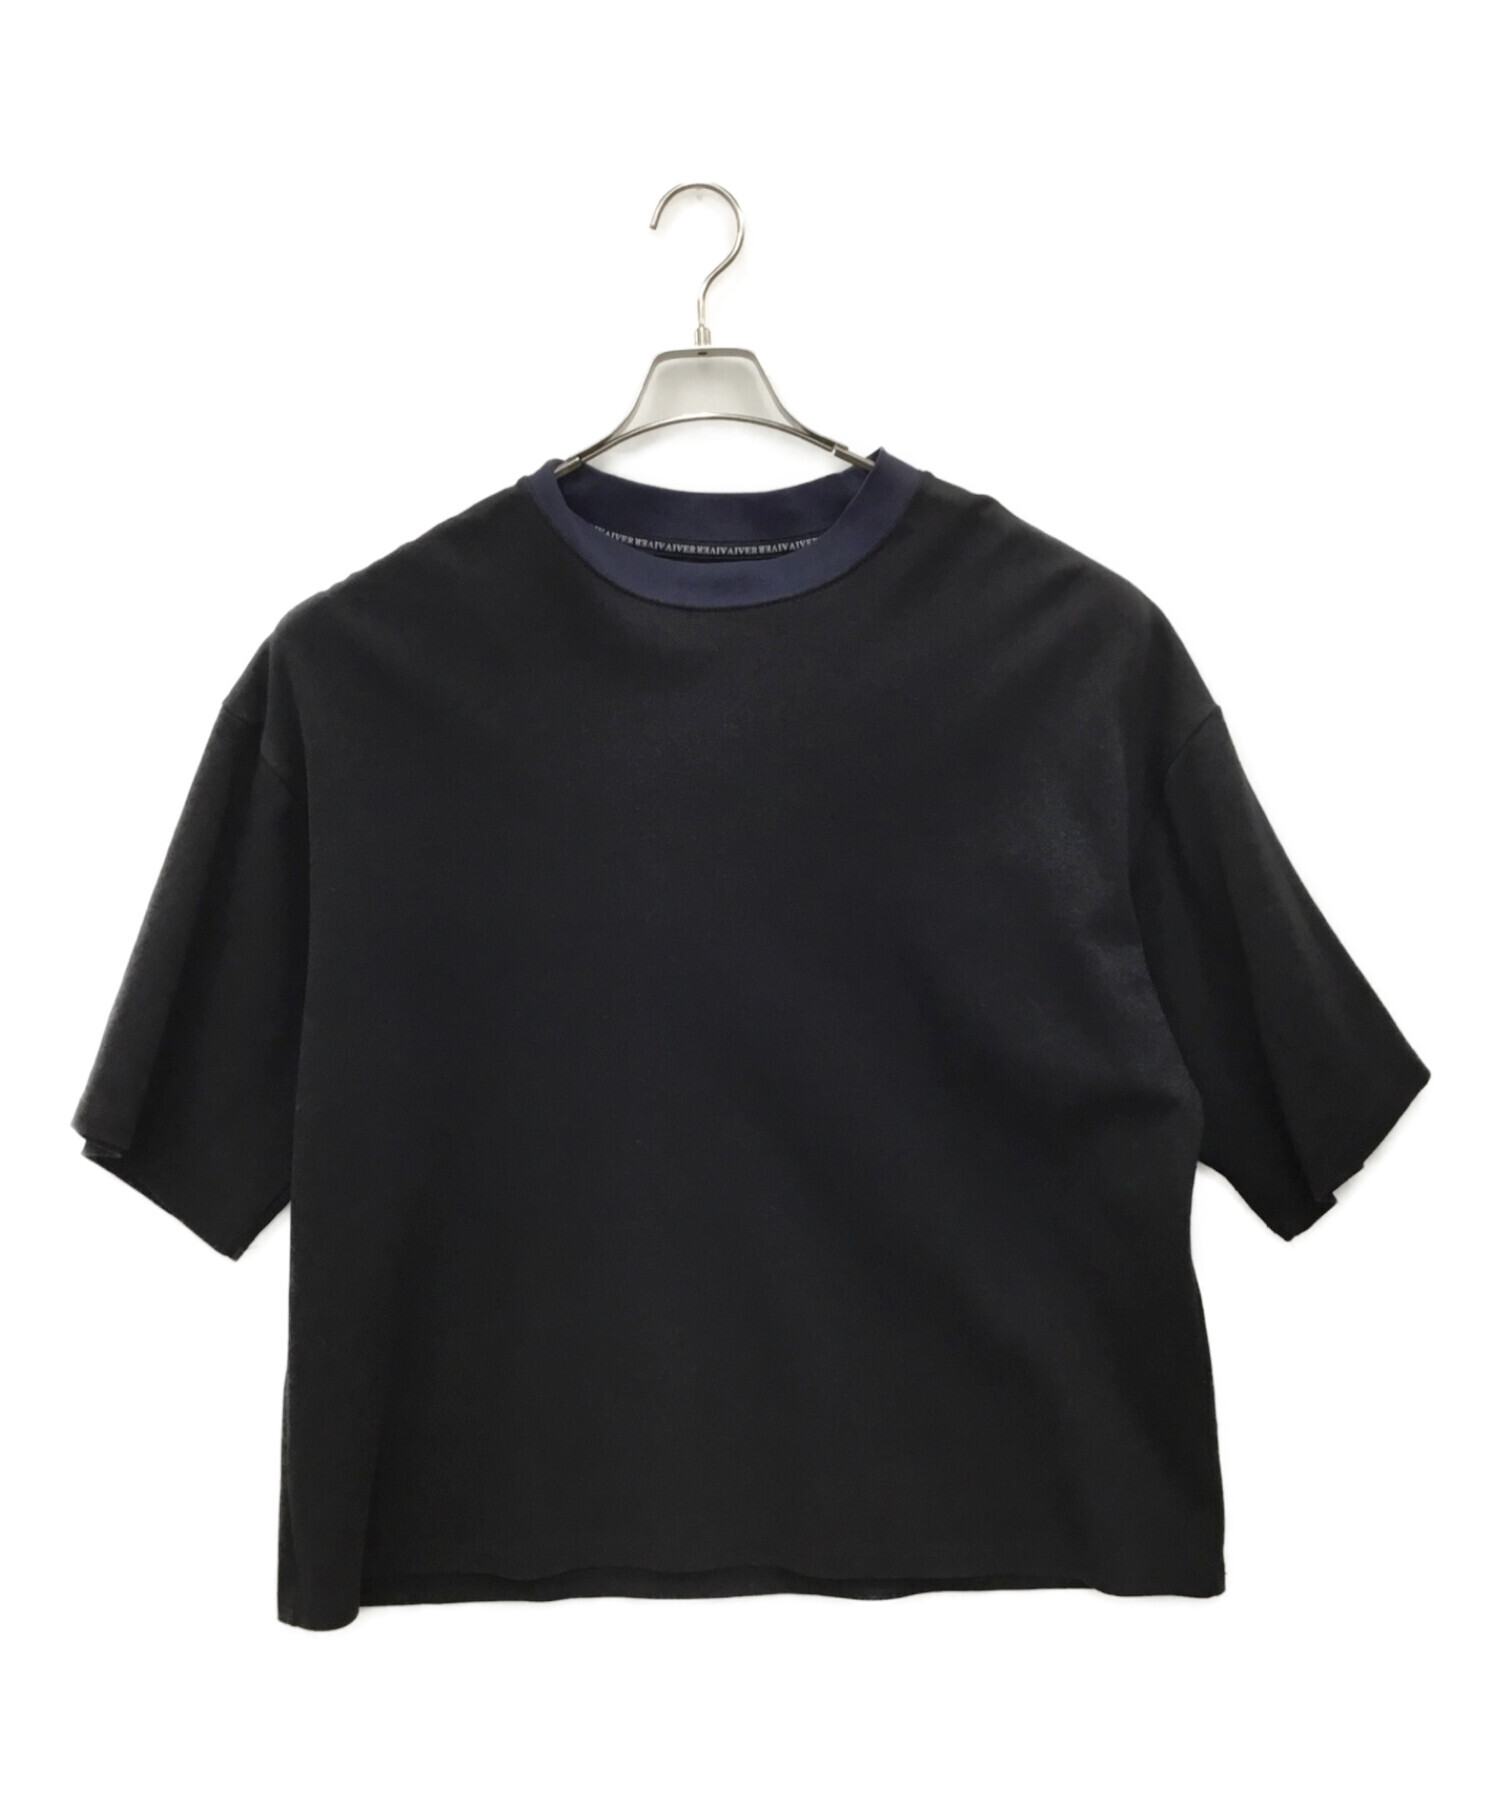 CASPER JOHN AIVER (キャスパージョンアイバー) 半袖カットソー ブラック サイズ:XL